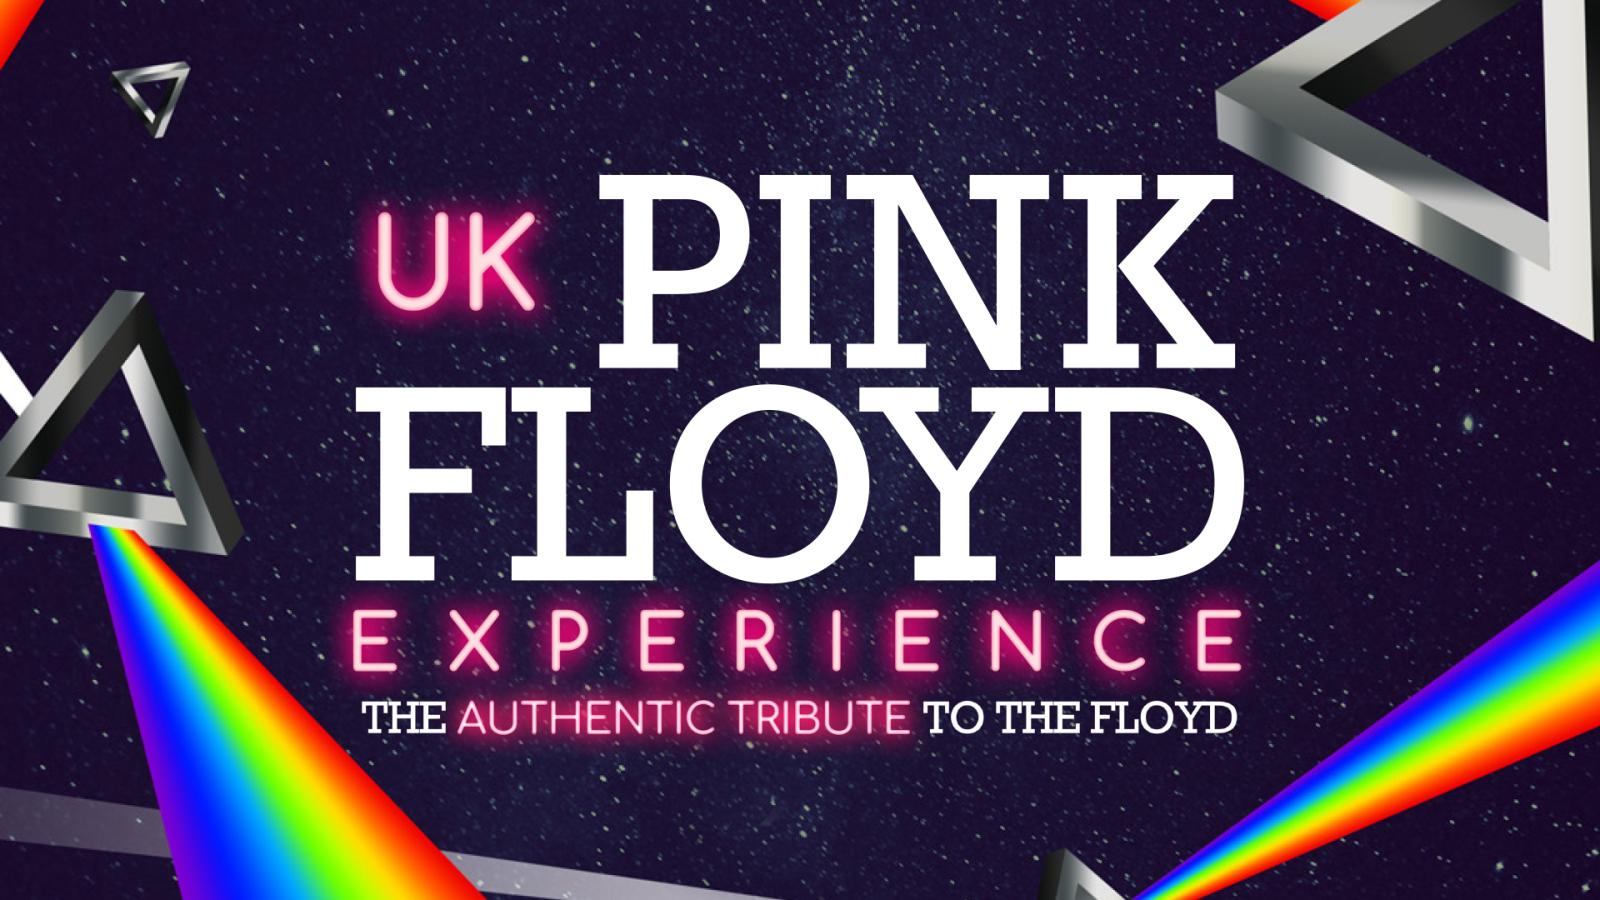 uk pink floyd experience tour 2022